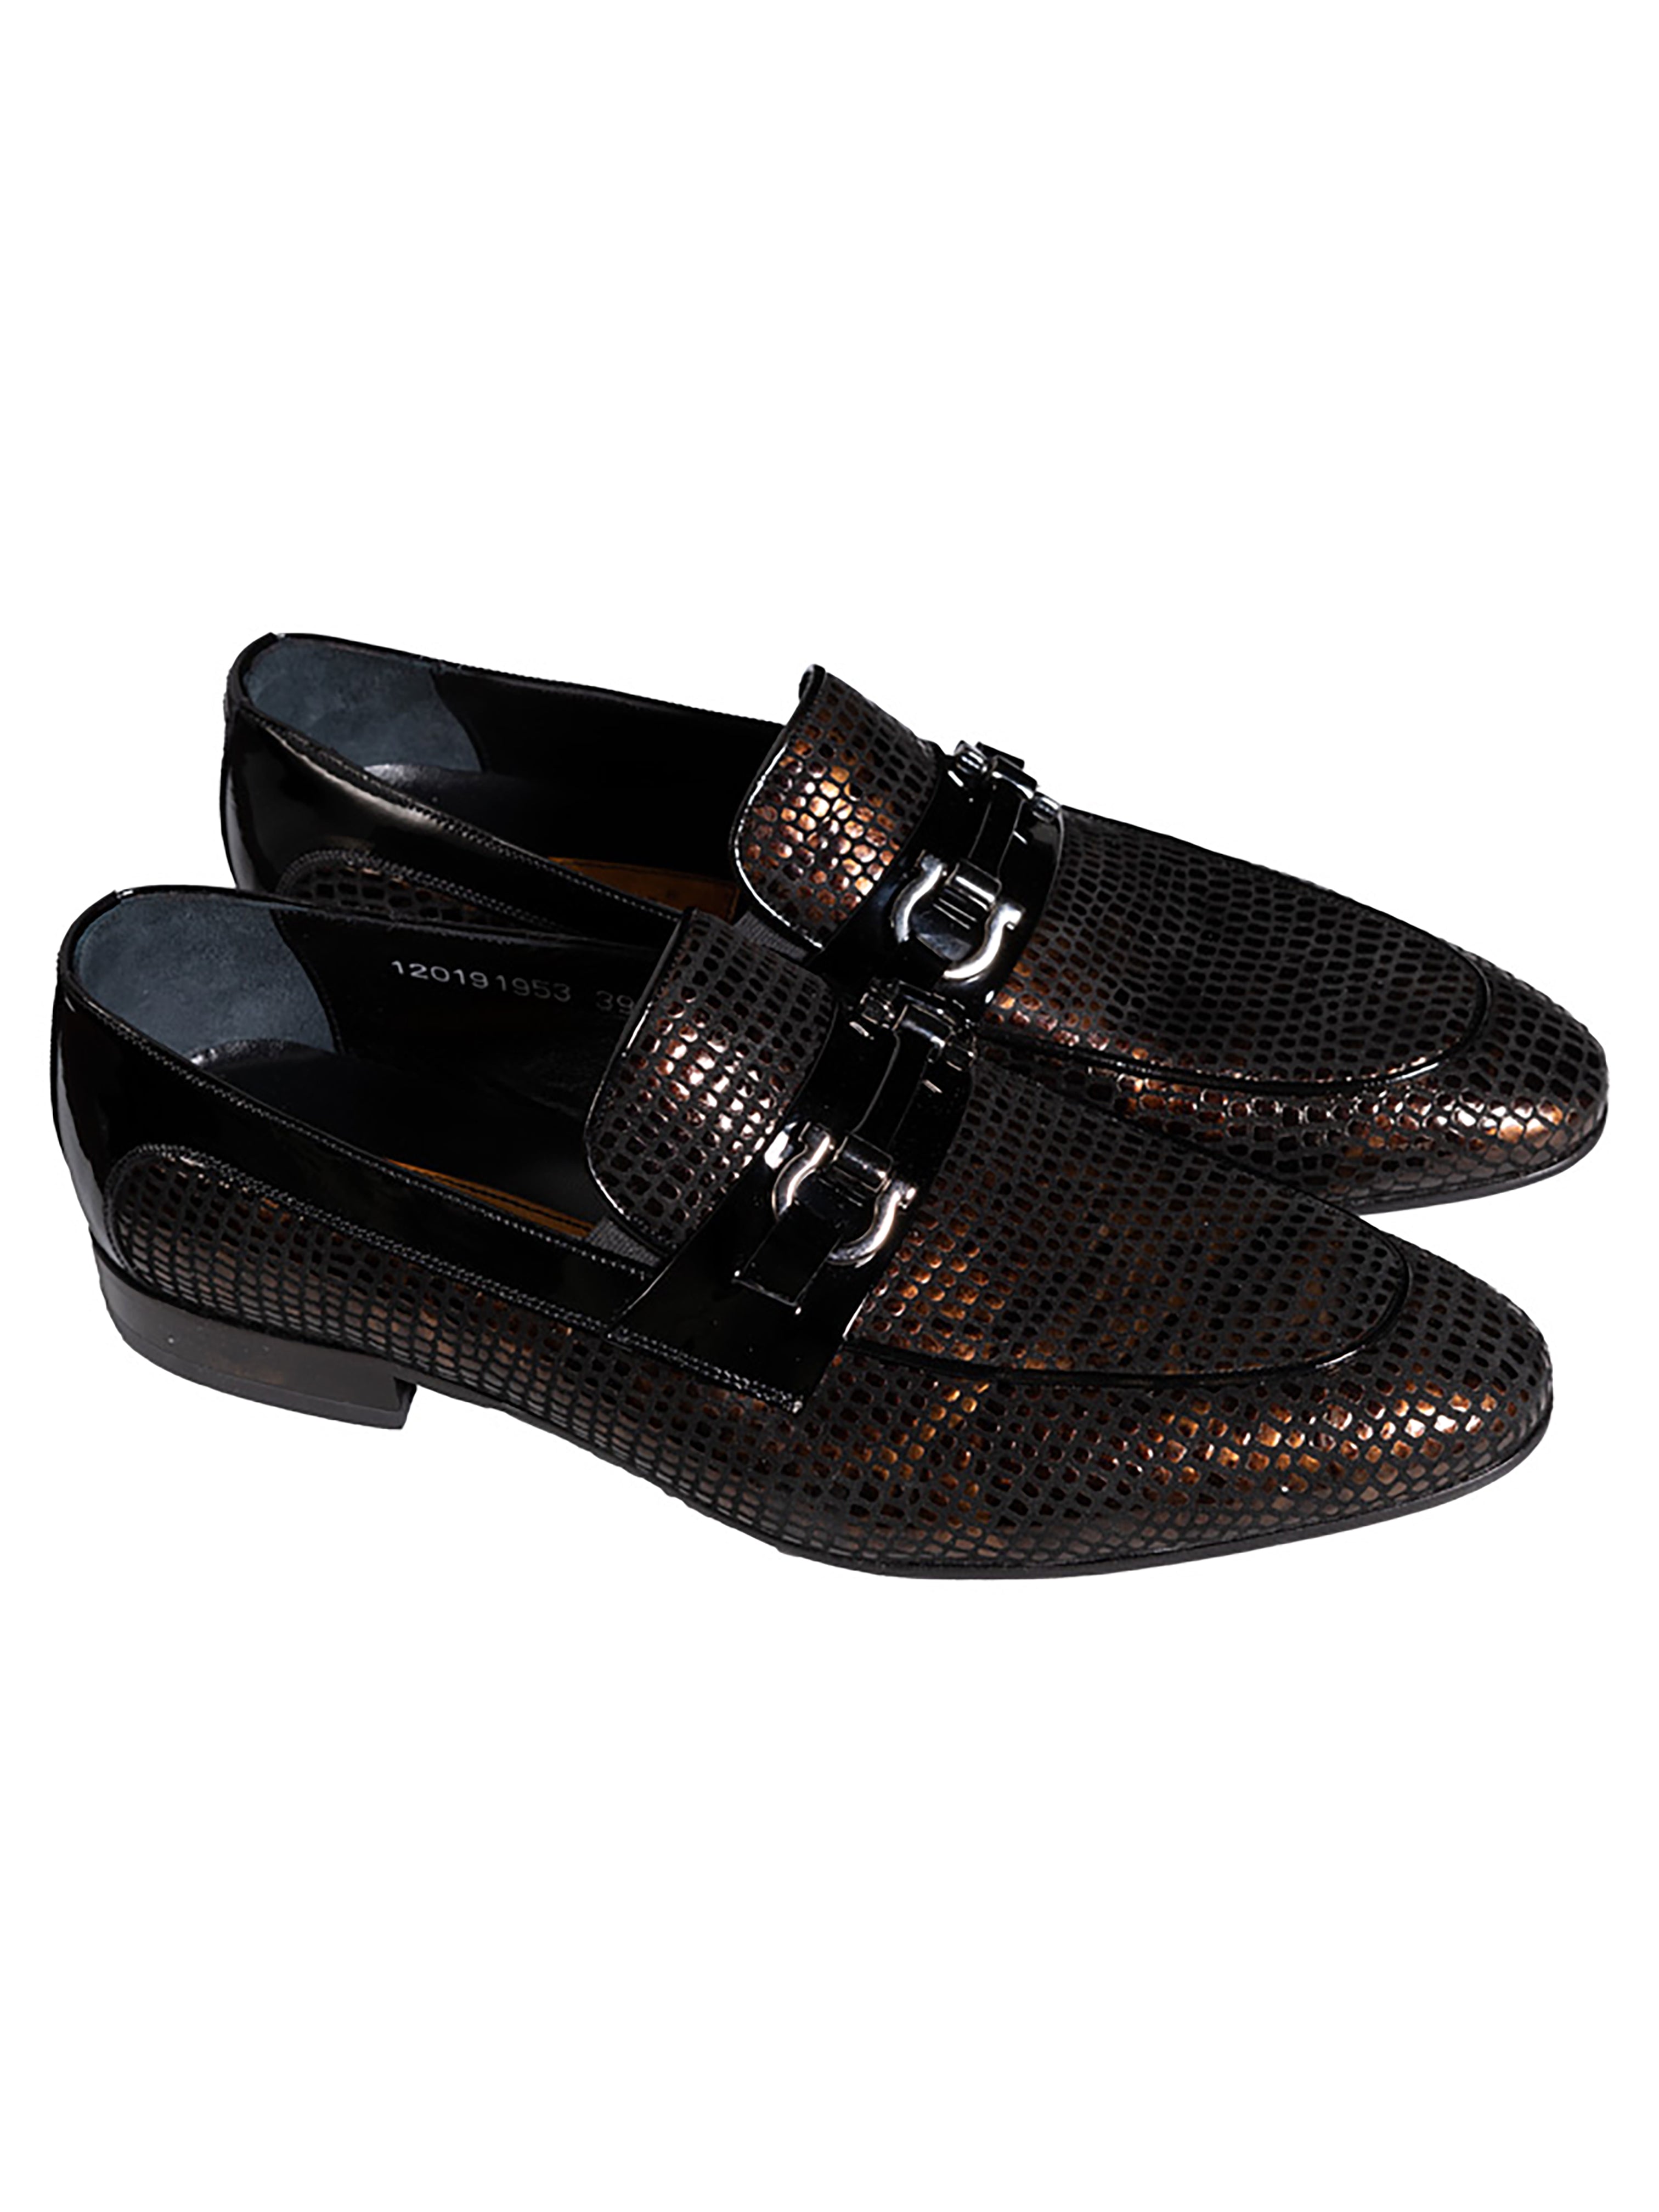 black /brown shoes